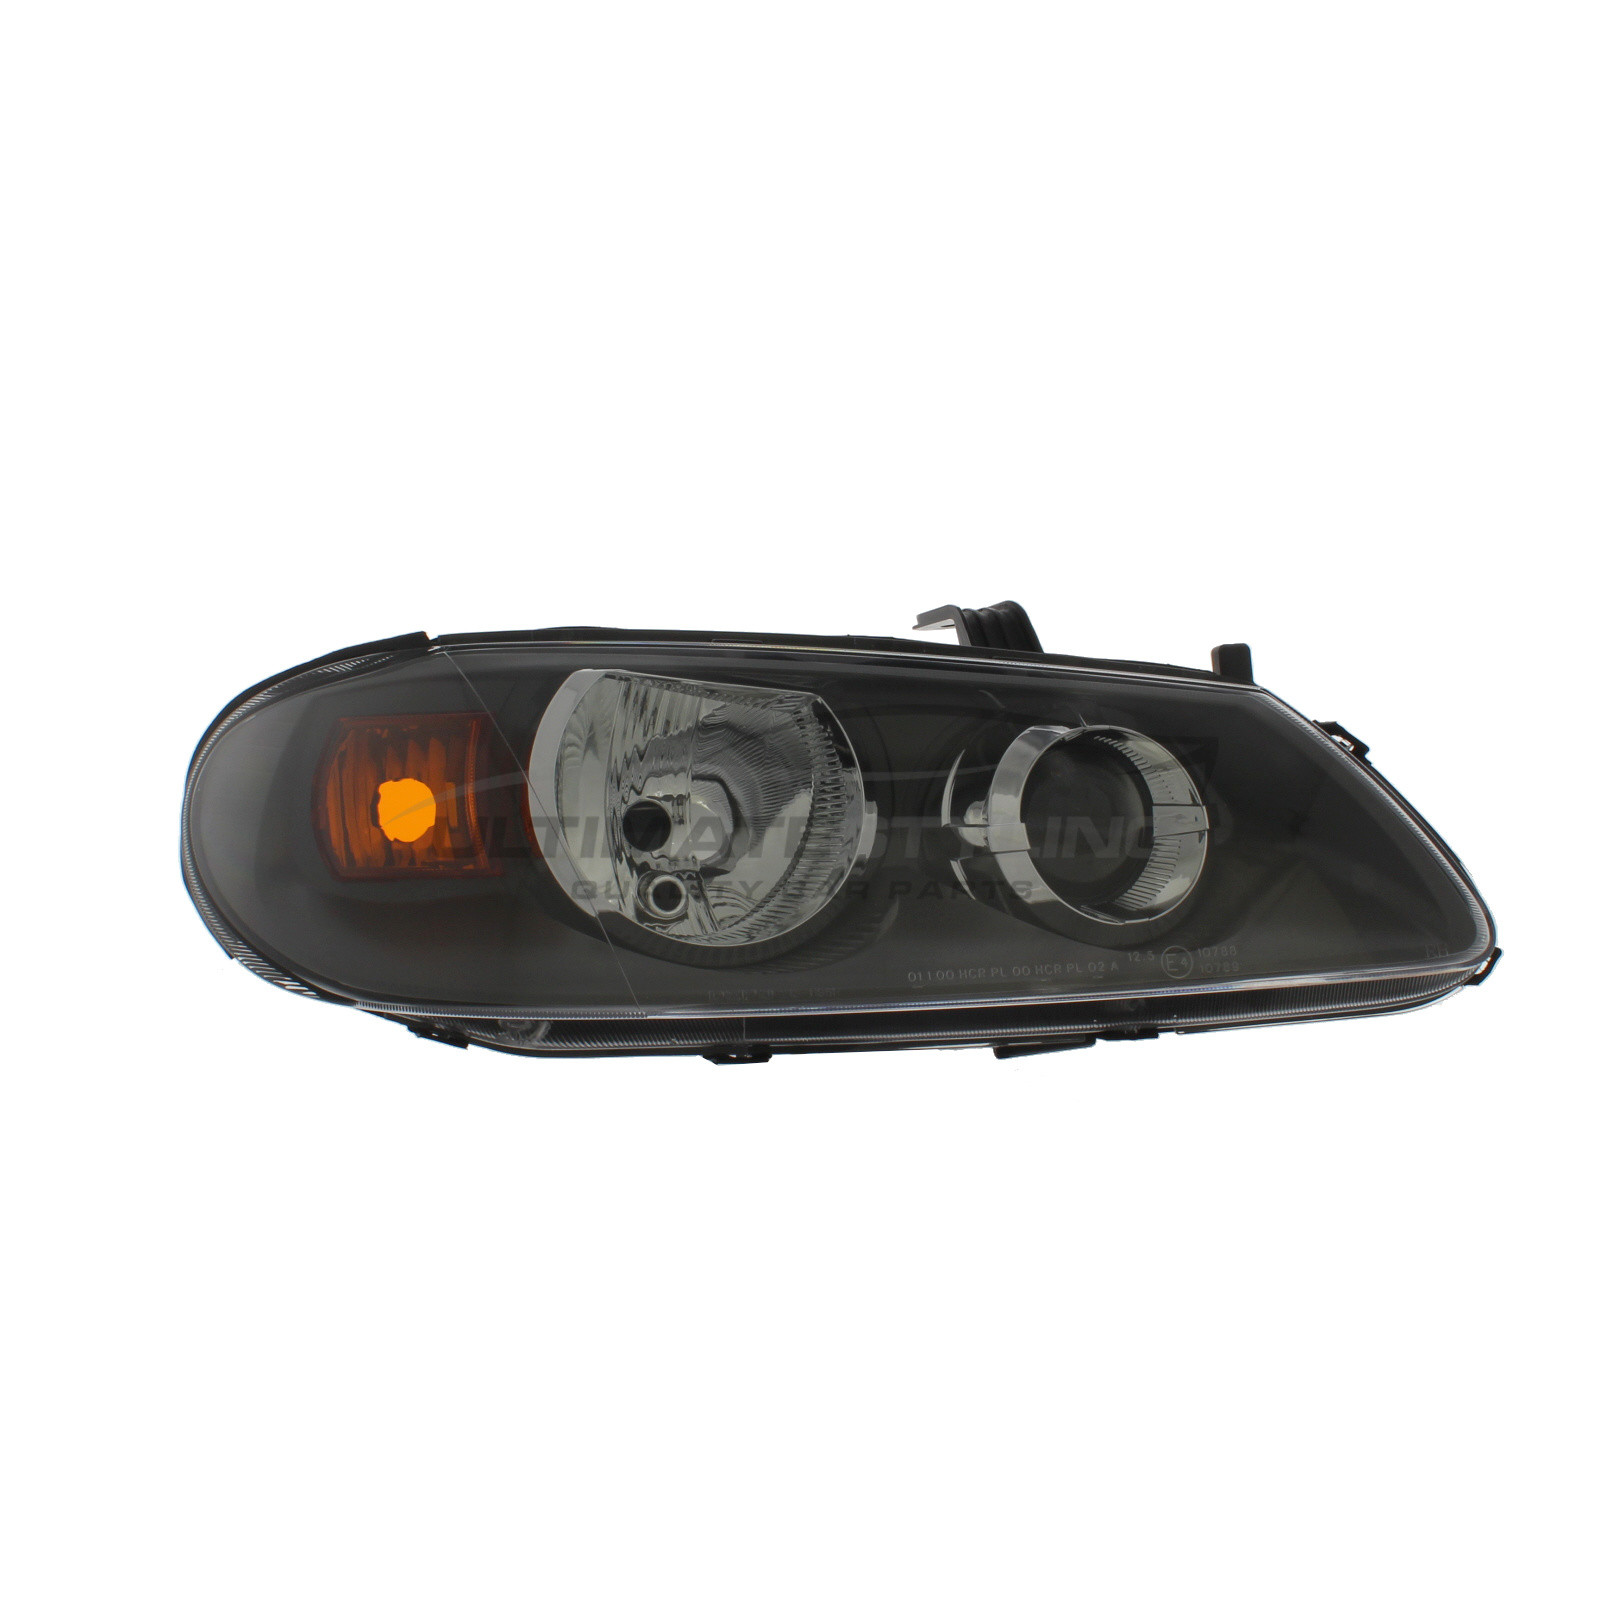 Headlight / Headlamp for Nissan Almera